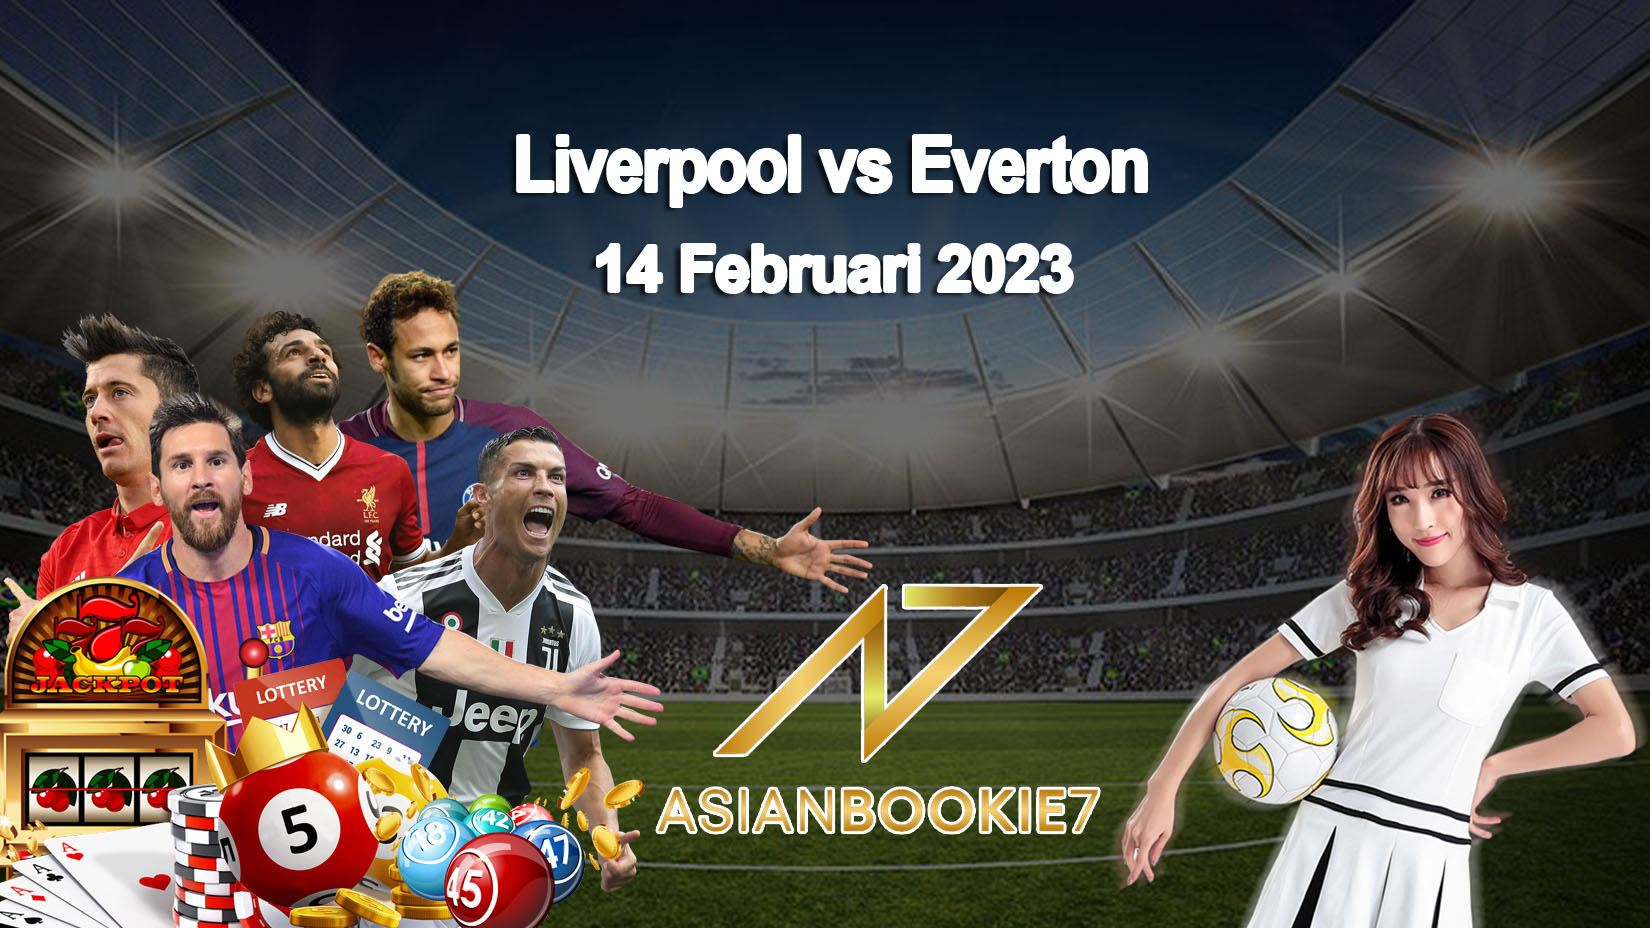 Prediksi Liverpool vs Everton 14 Februari 2023